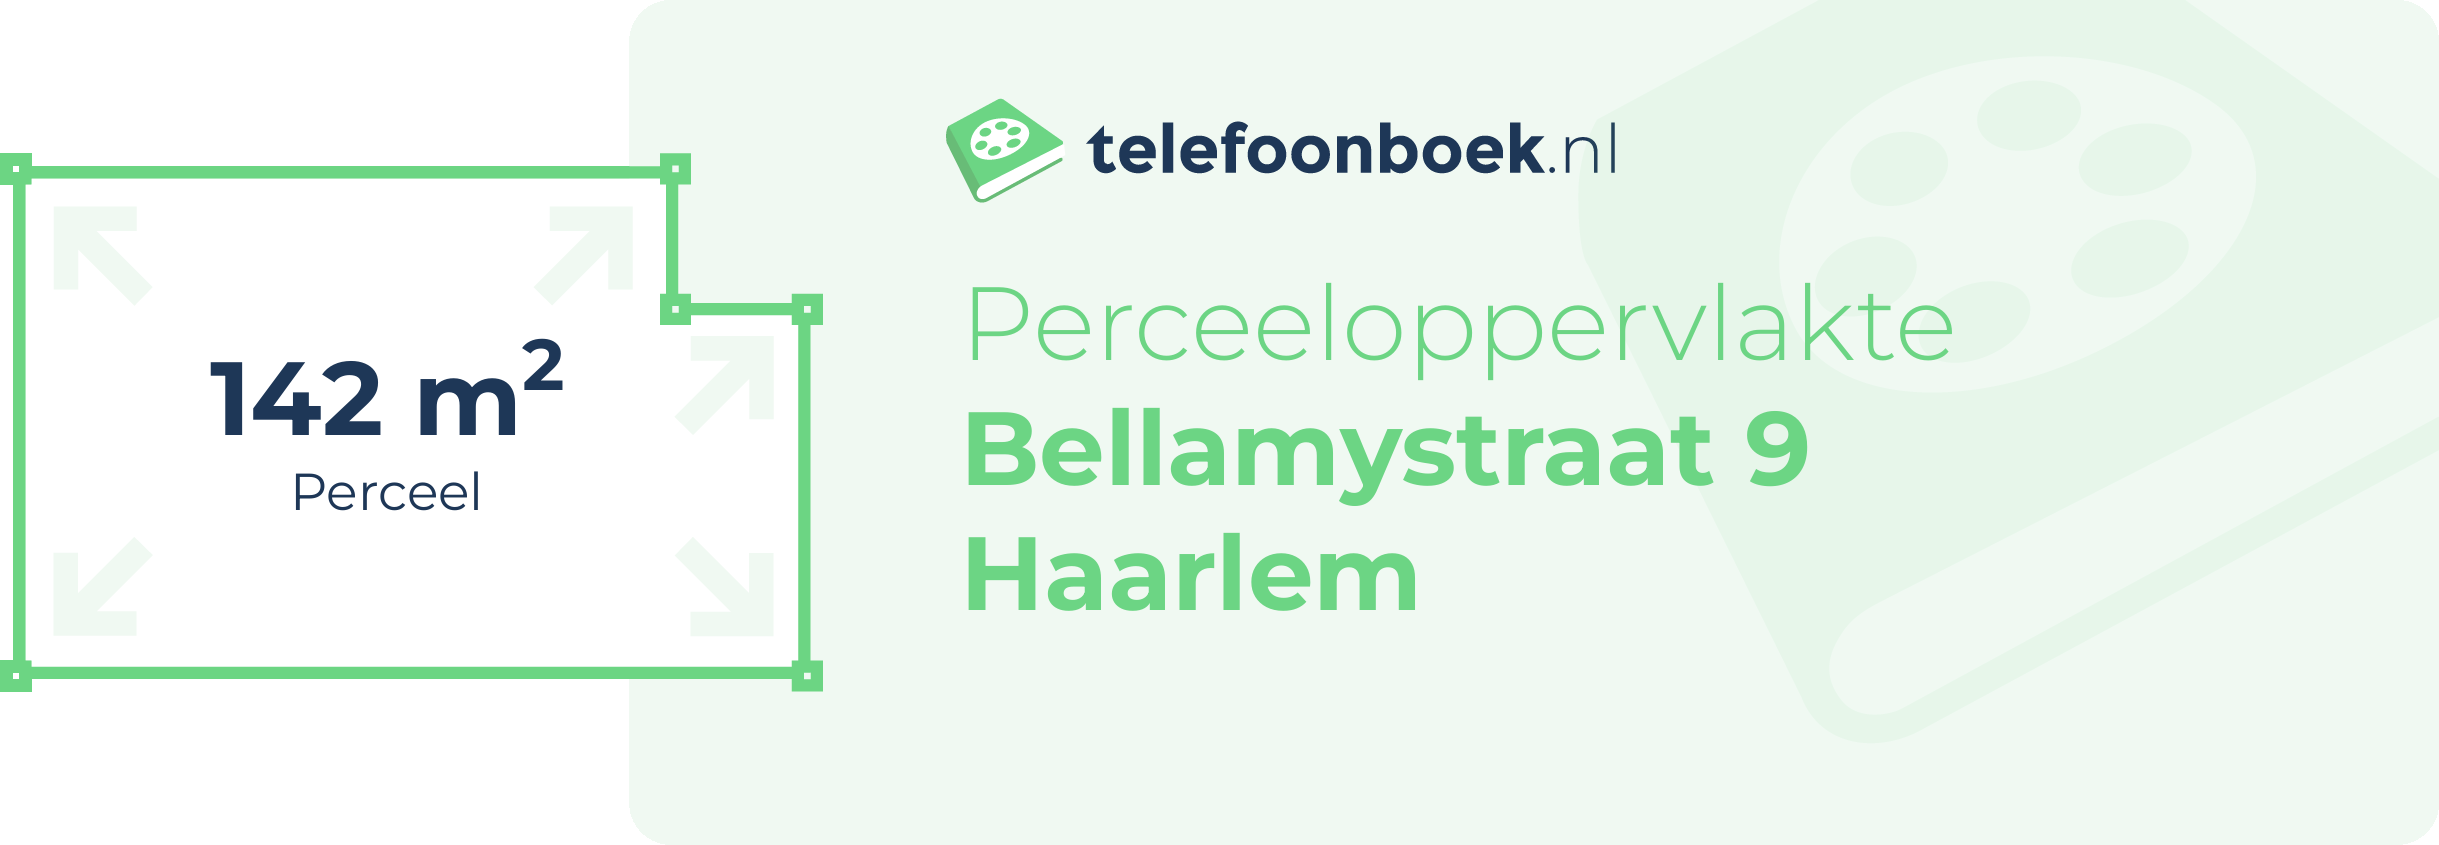 Perceeloppervlakte Bellamystraat 9 Haarlem